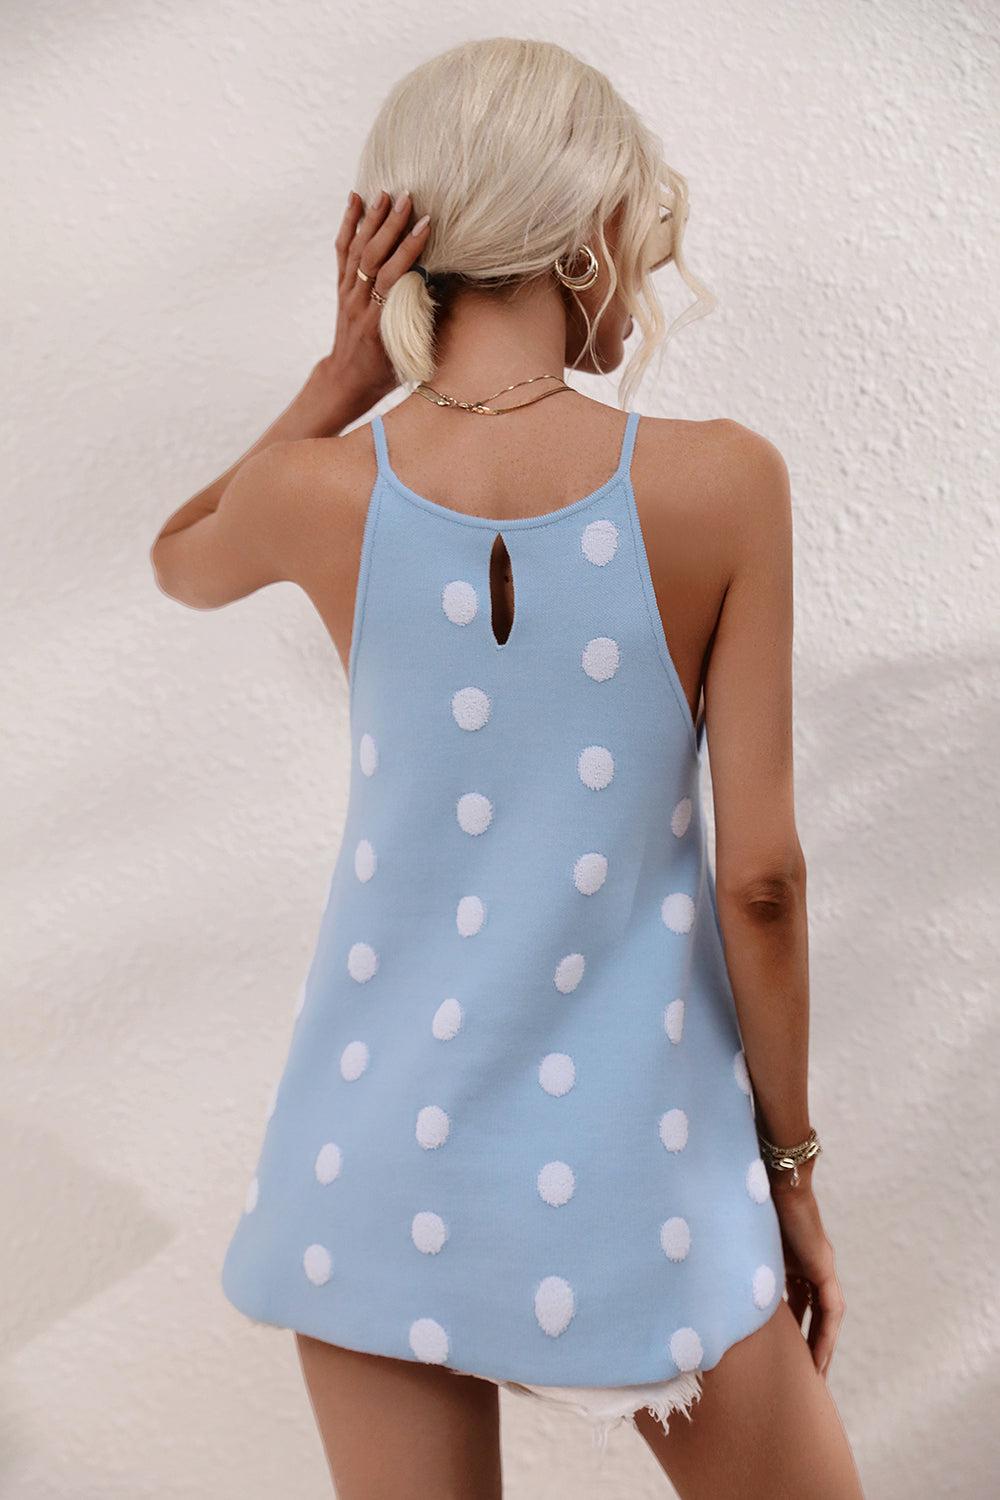 a woman wearing a blue and white polka dot dress